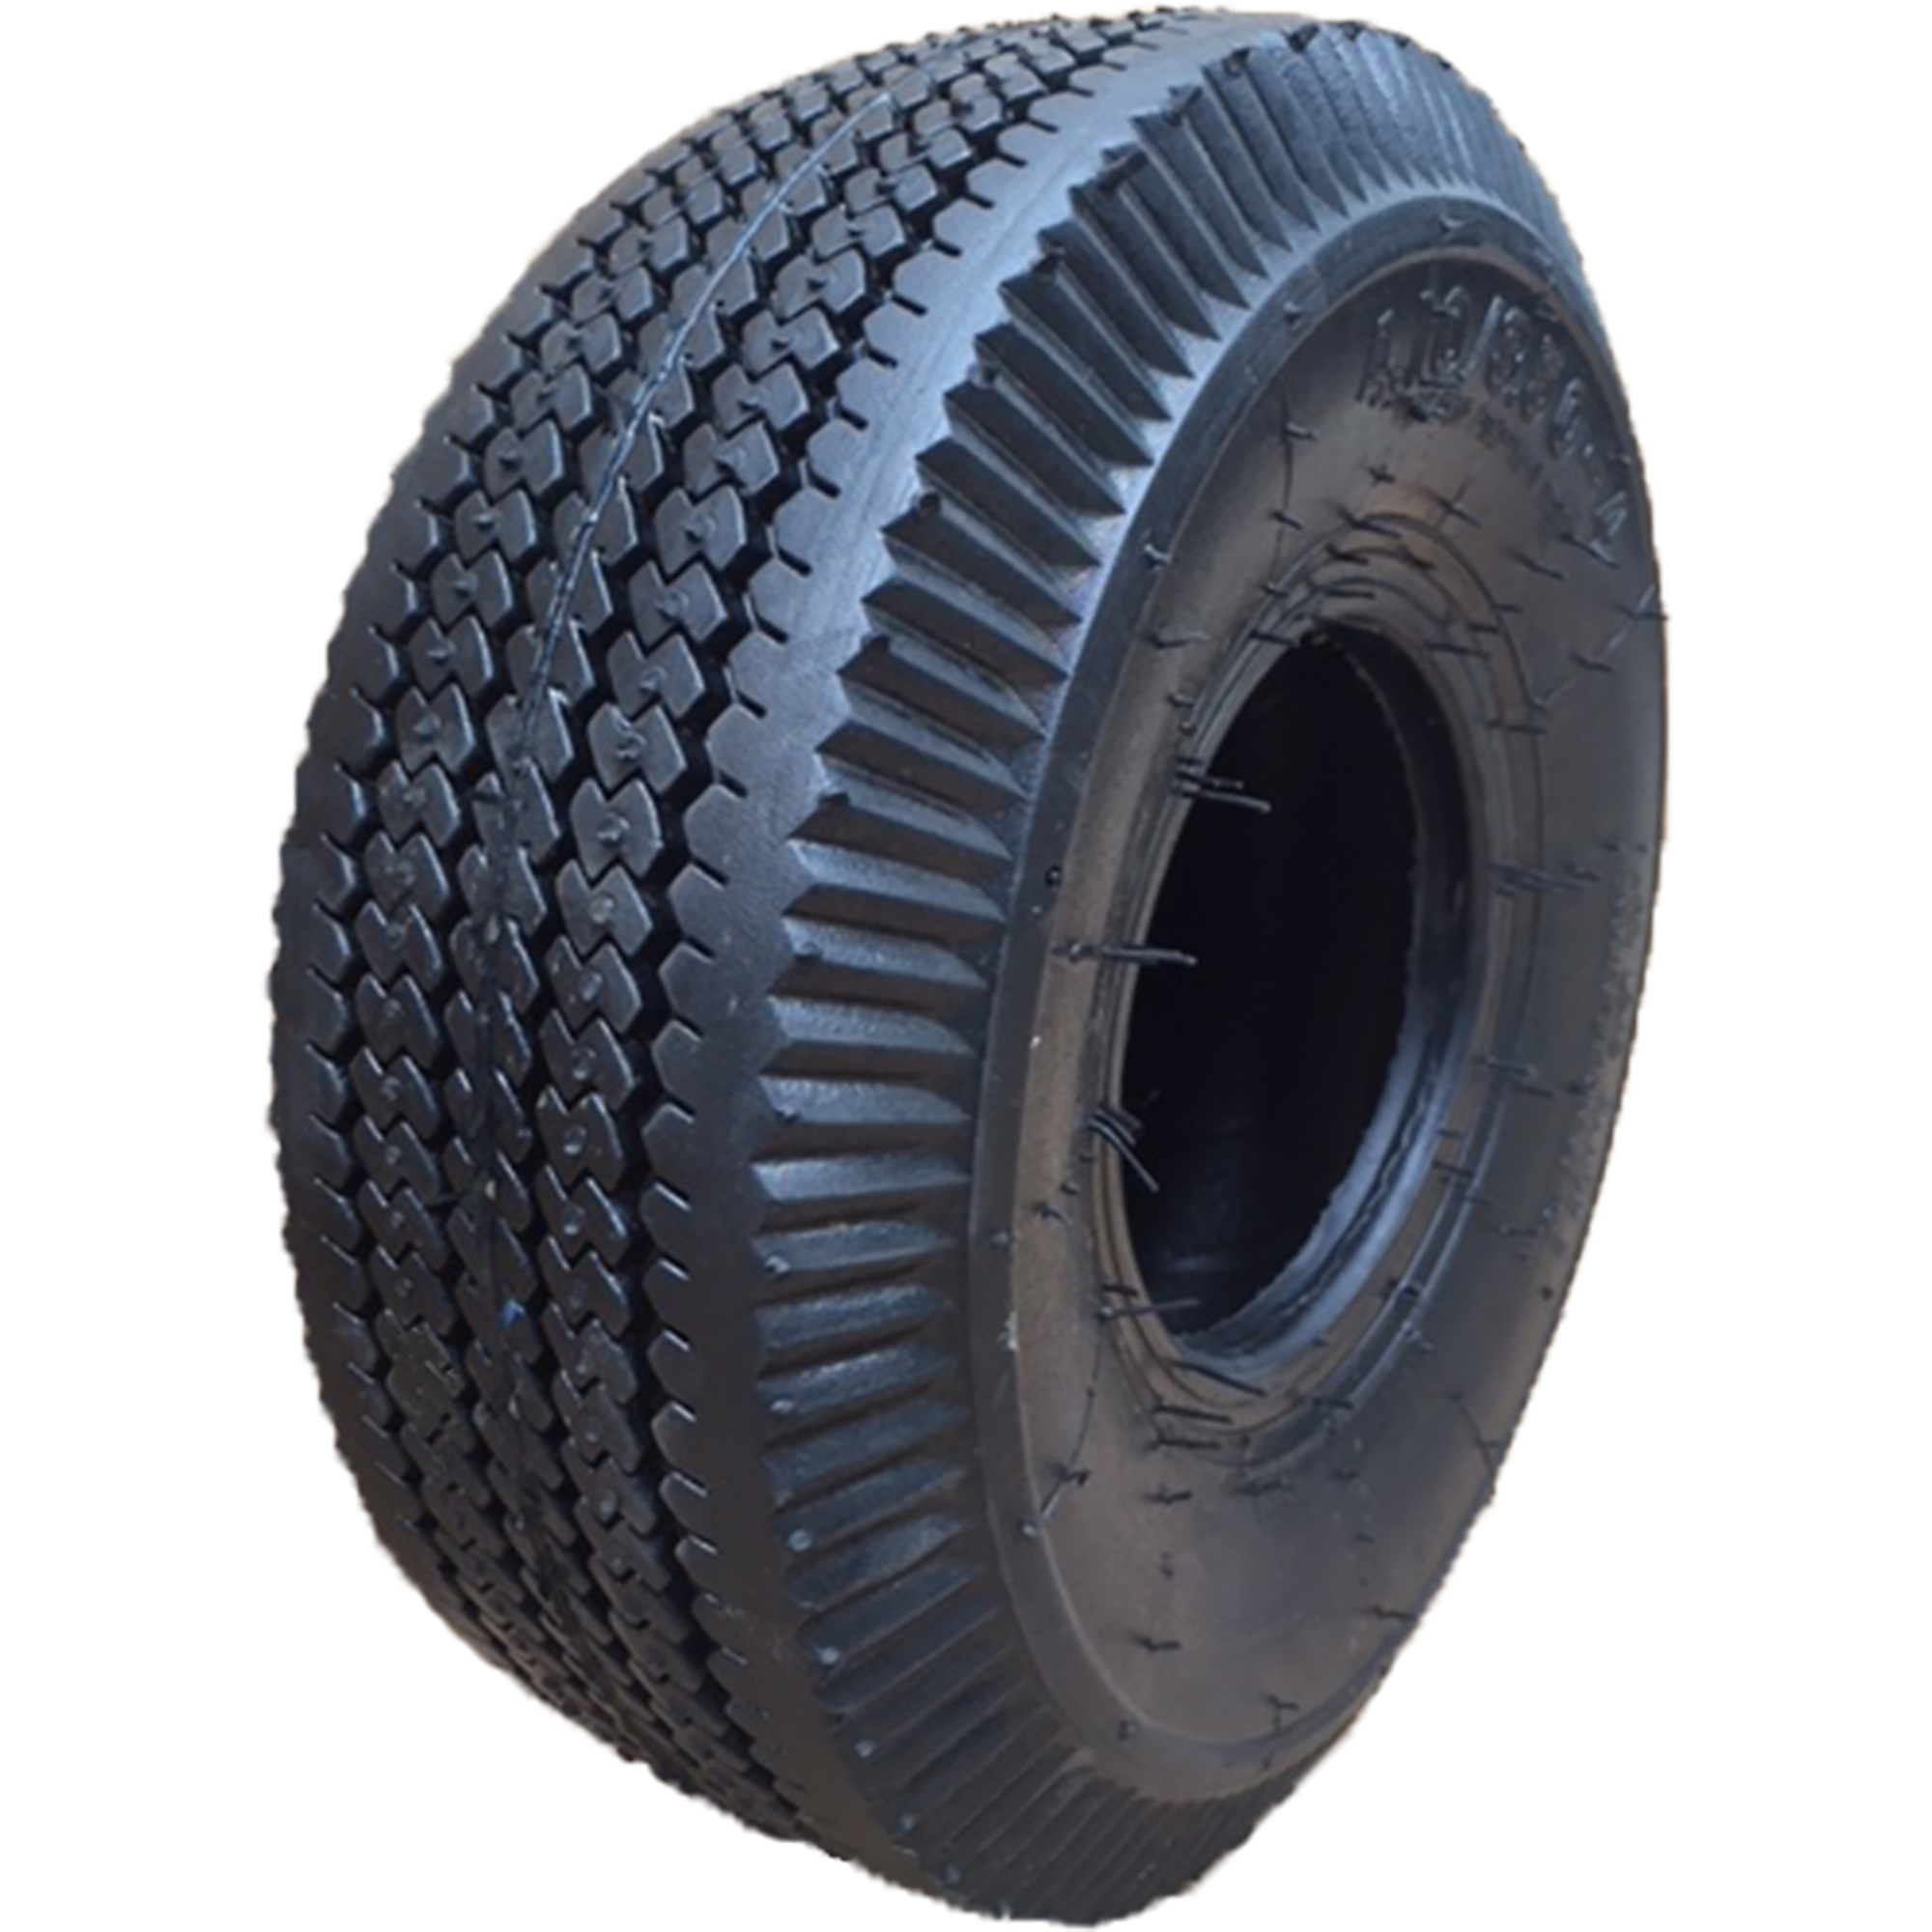 HI-RUN, Wheel Barrow Tire, Sawtooth, Tire Size 4.10/3.50-4 Load Range Rating A, Model WD1303